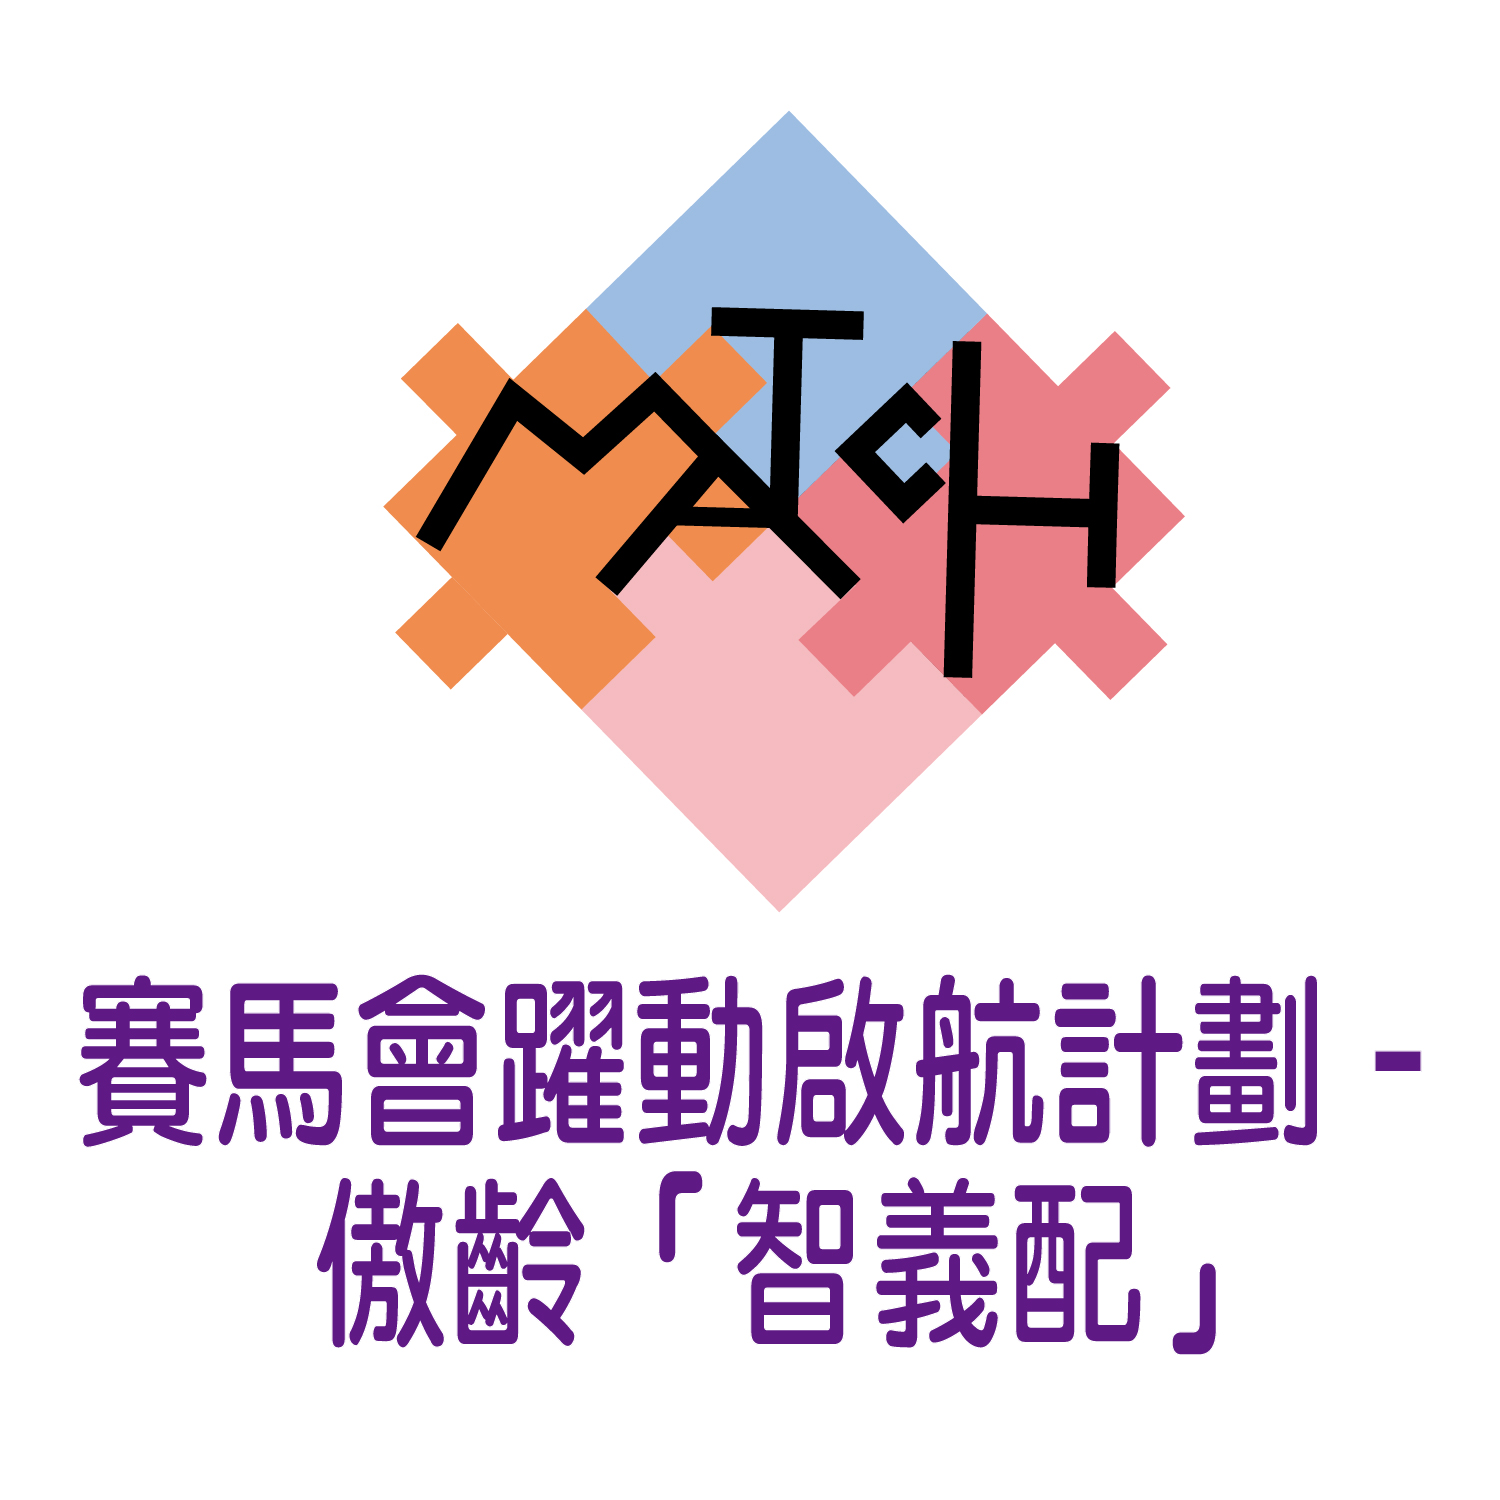 match logo 